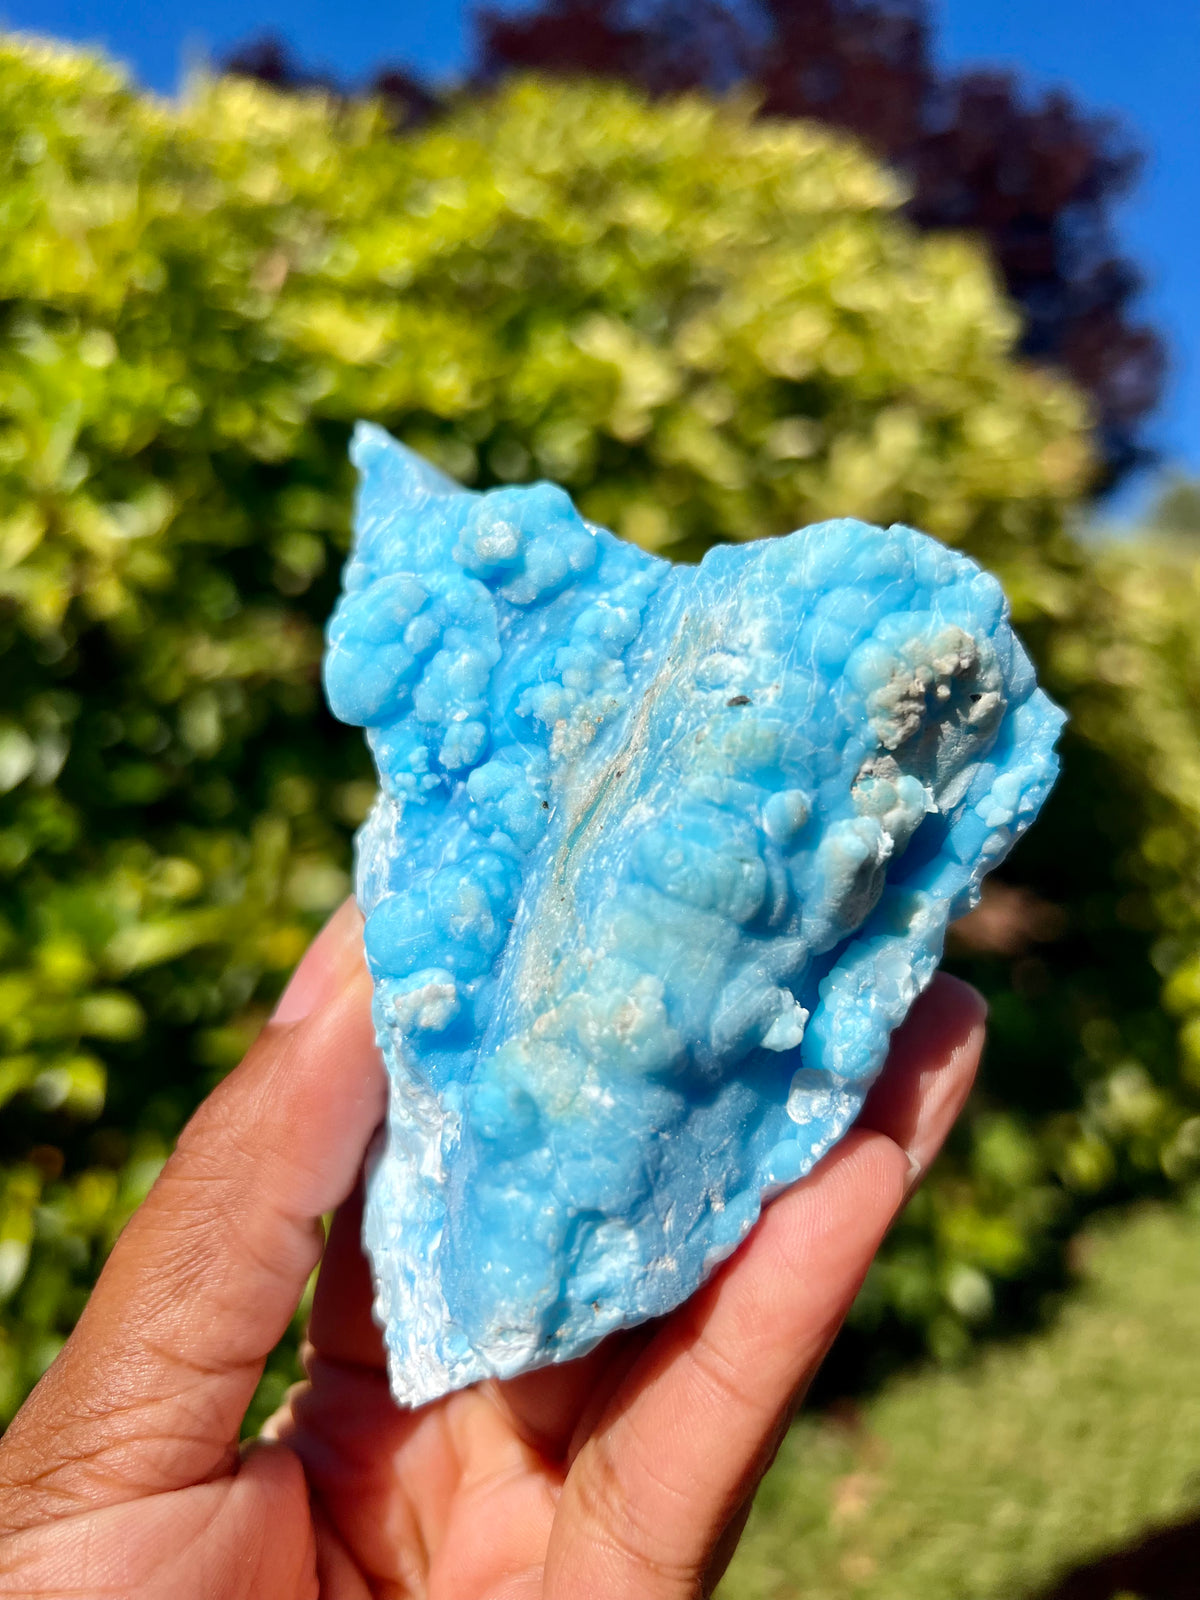 Blue Aragonite Specimen - A